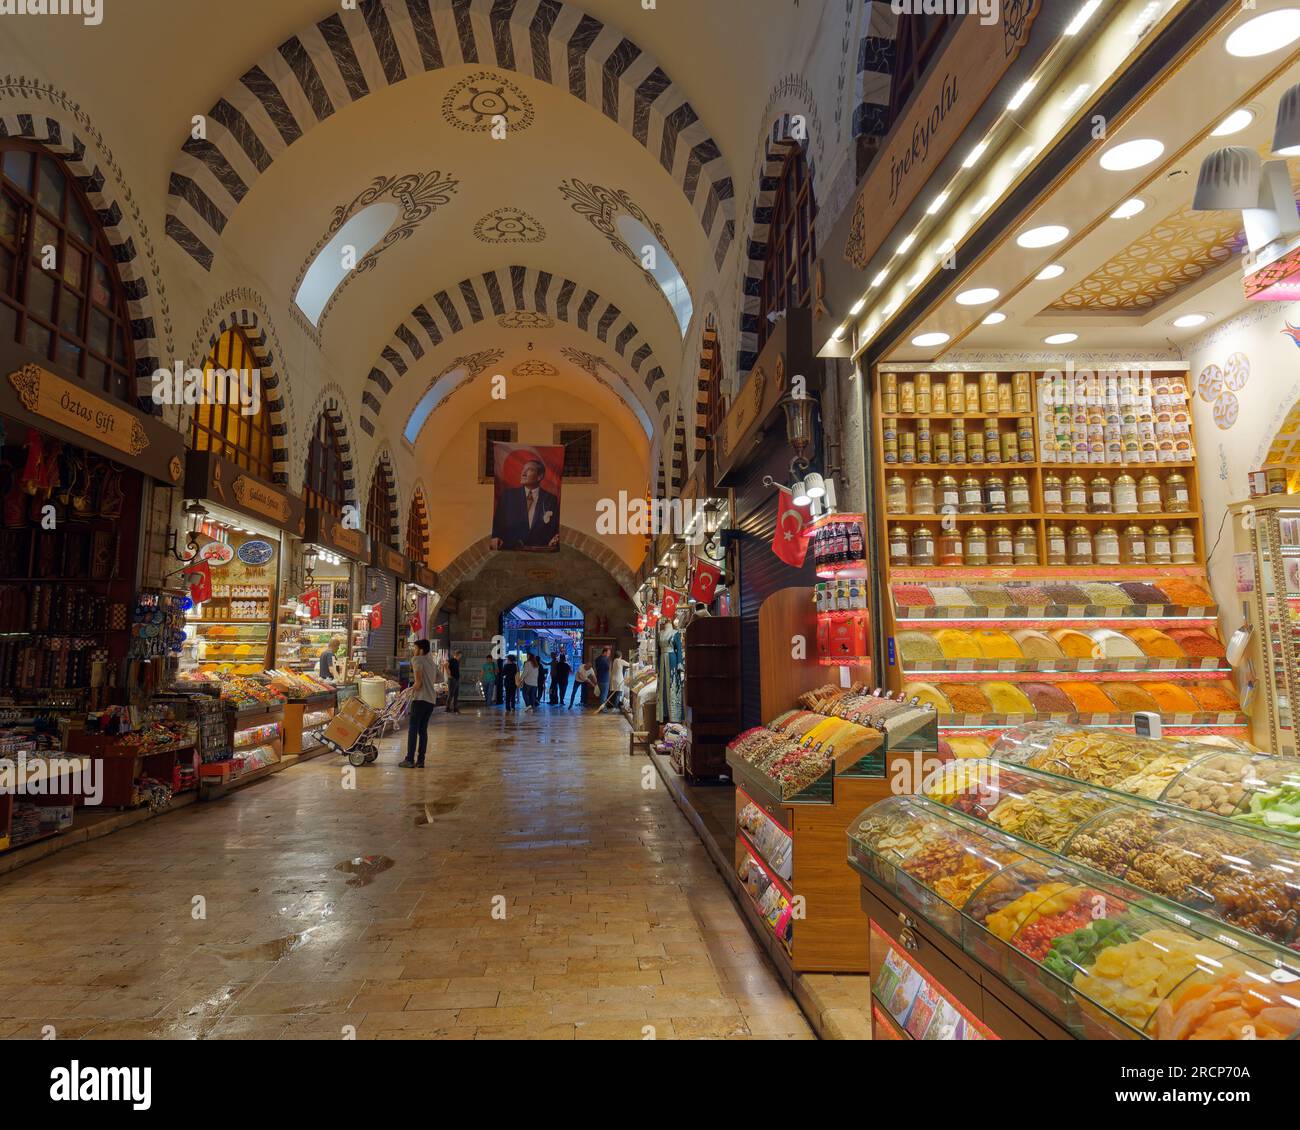 Interior of the Spice Bazaar (Mısır Çarşısı, meaning Egyptian Bazaar) in Istanbul, Turkey. Shops also selling tea, sweets and durkish delight. Stock Photo